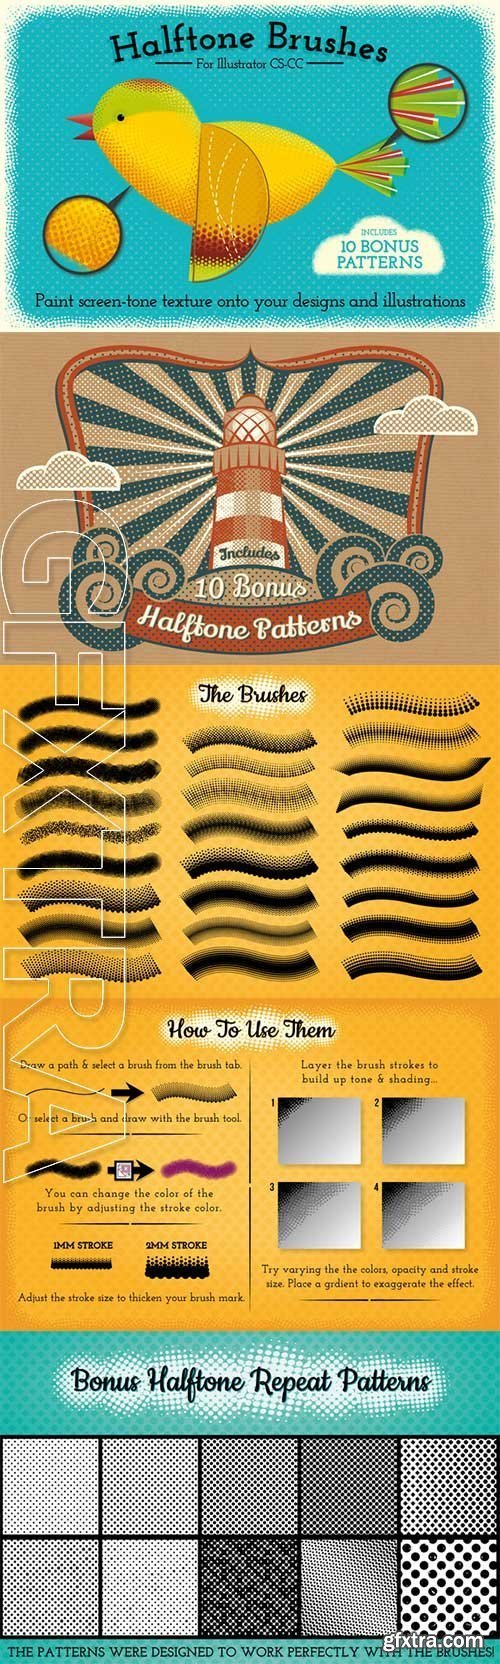 CM - Halftone Brushes + Bonus Patterns 252580